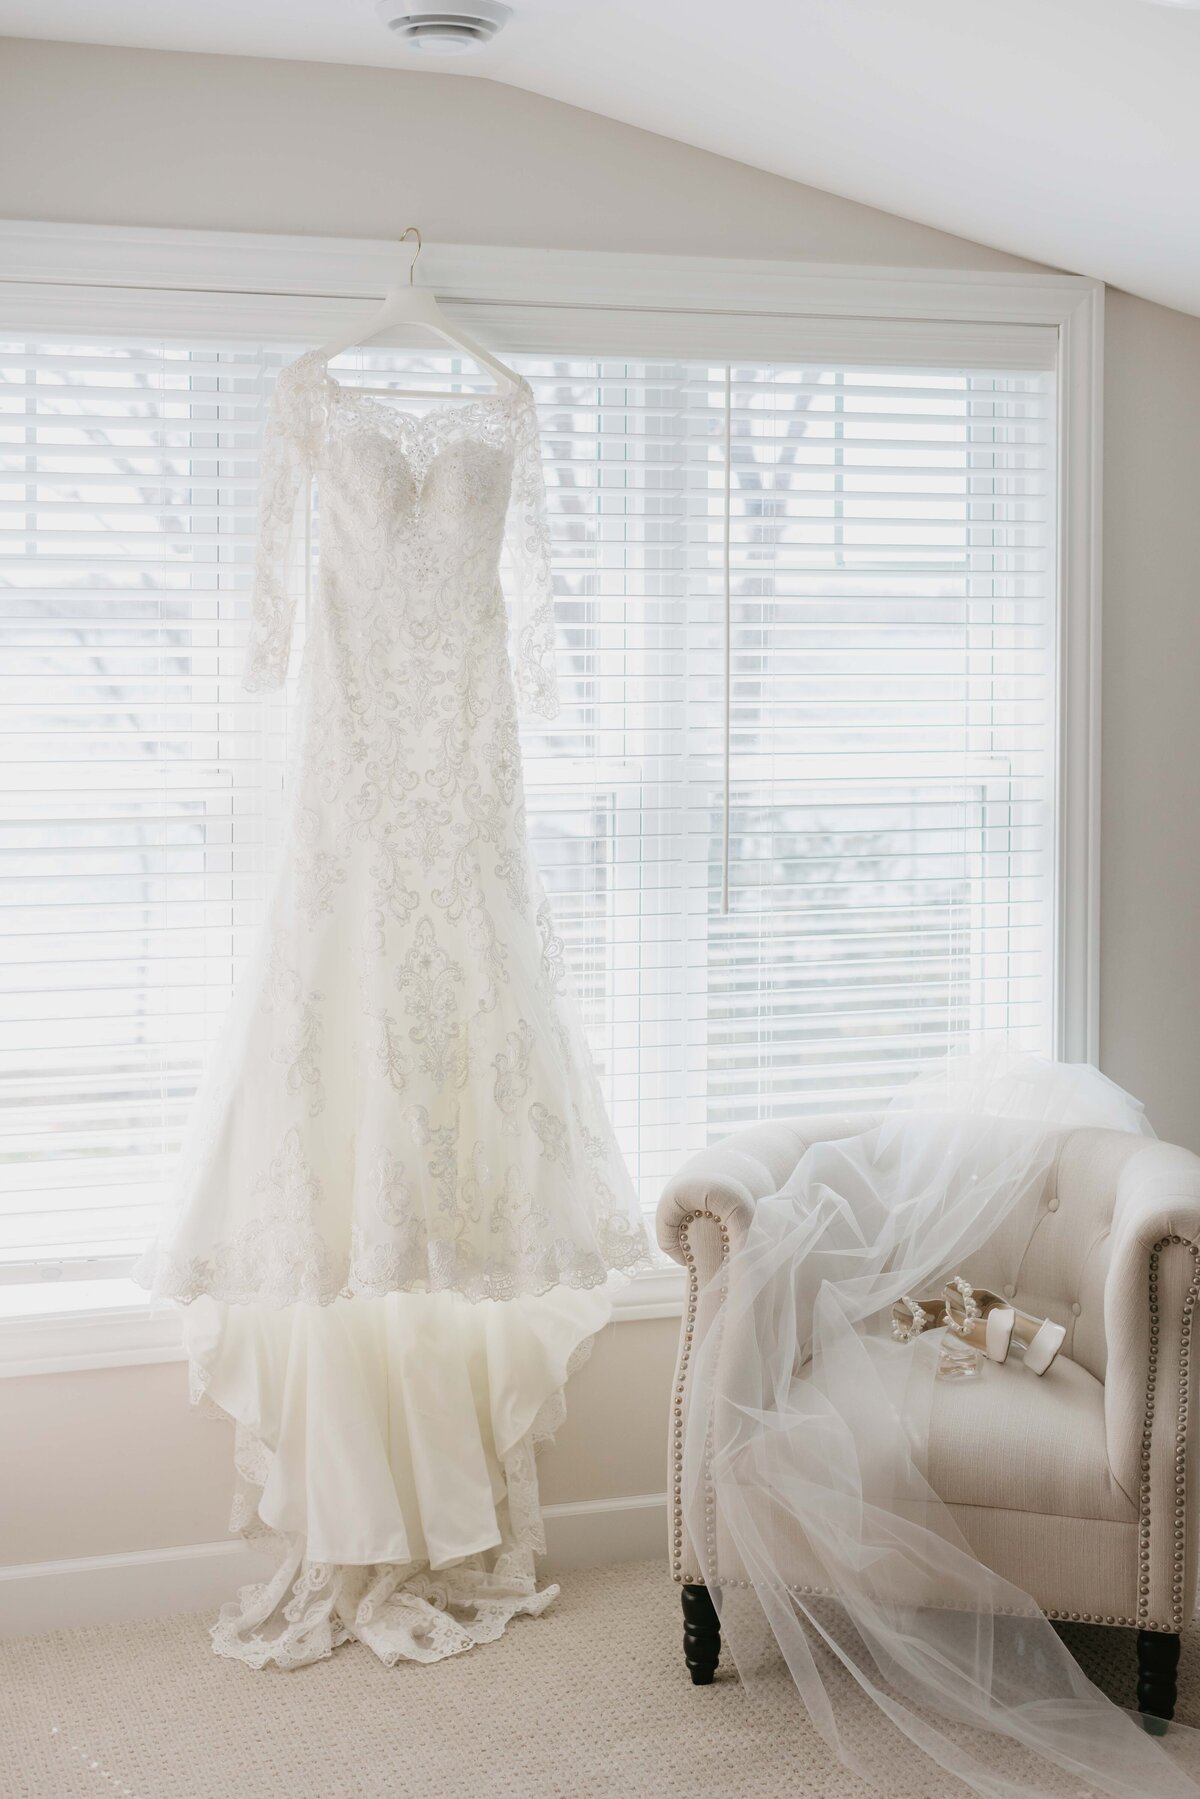 lace wedding dress staged in window